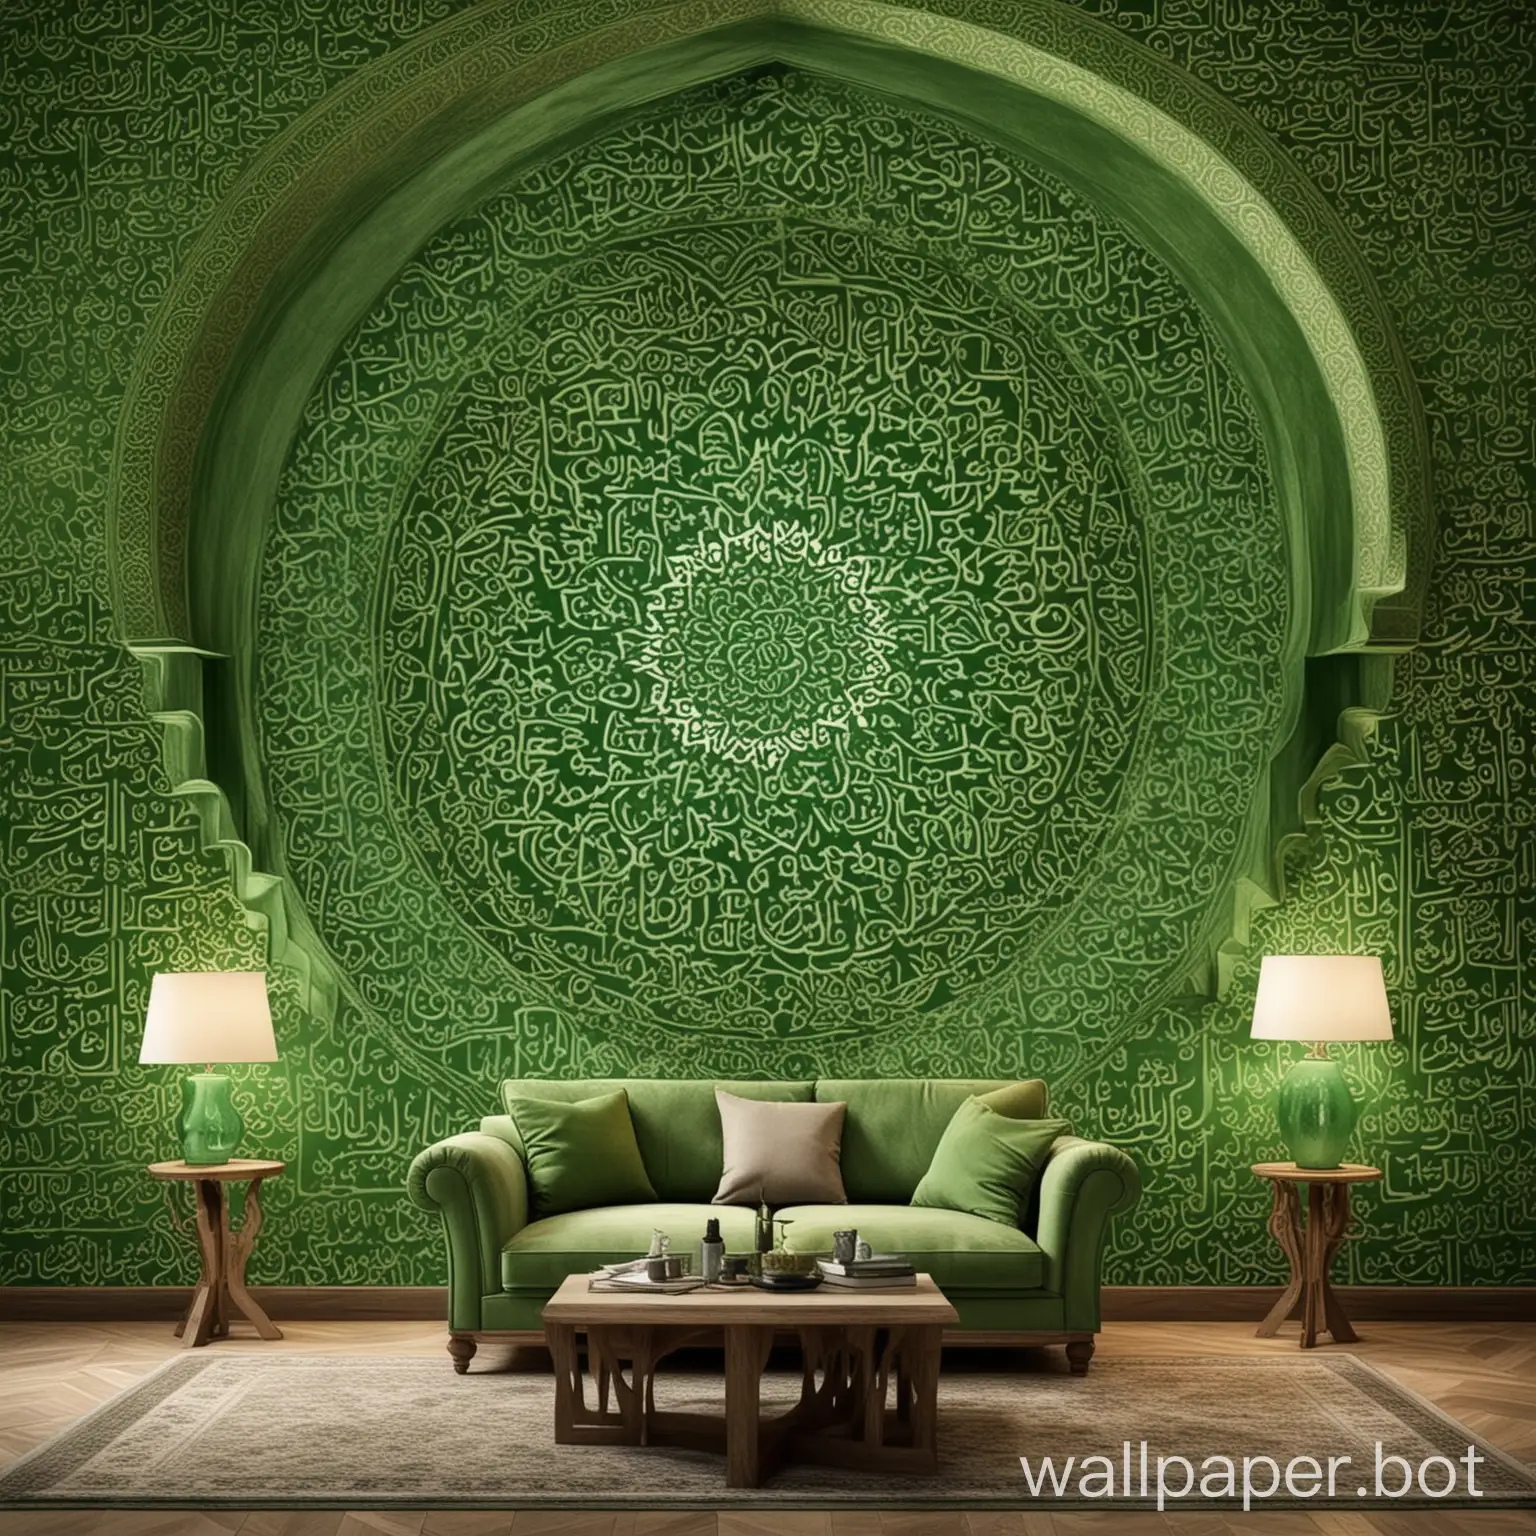 Make the wallpaper Islamic shades of green dominance